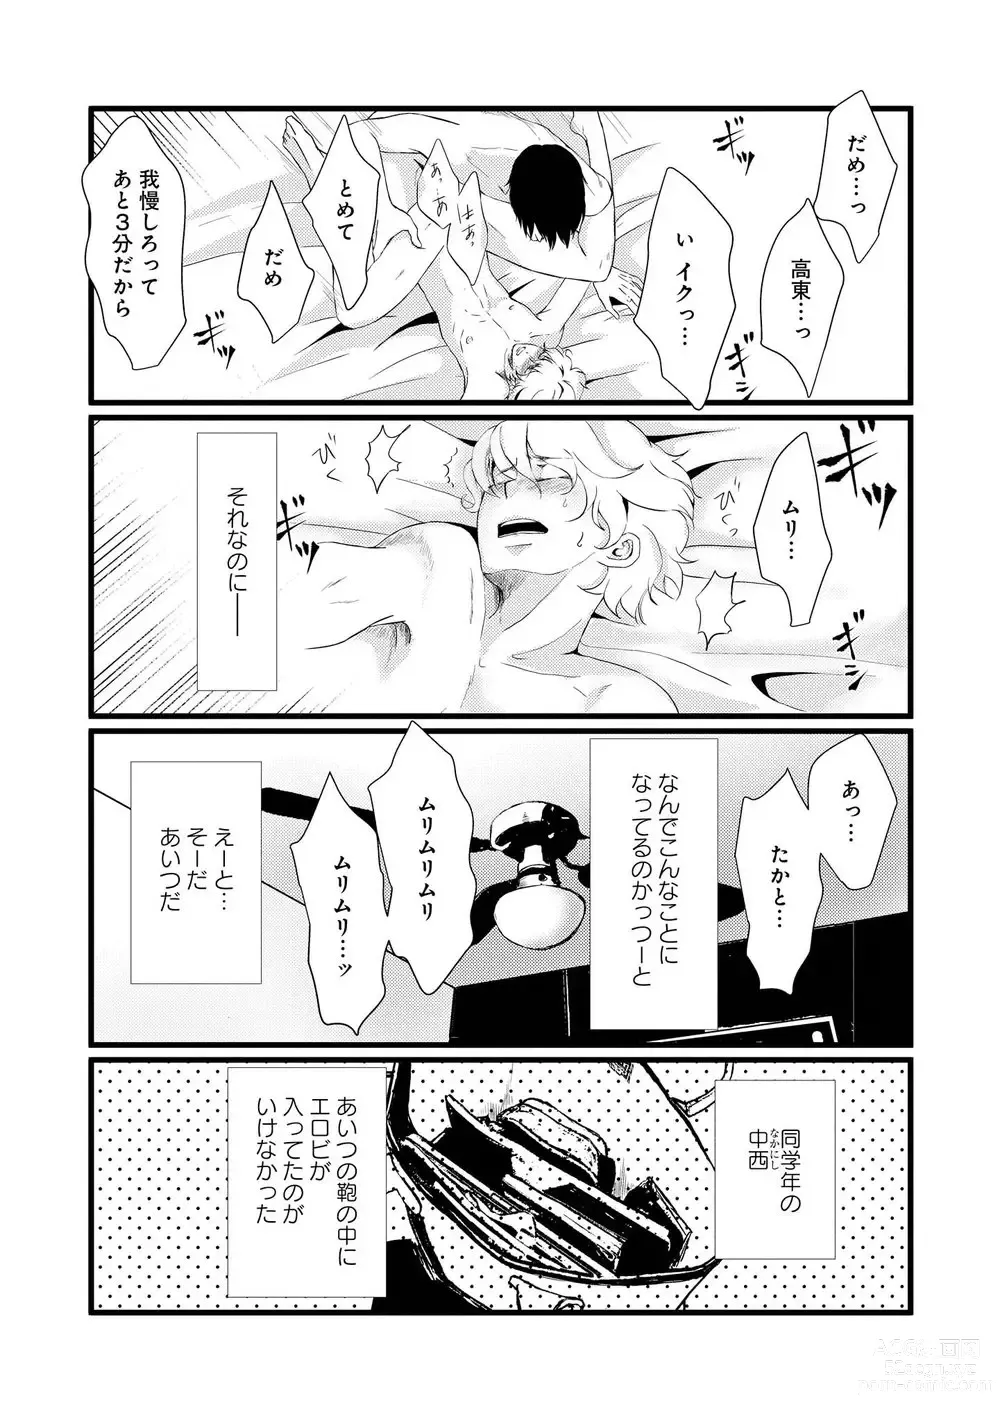 Page 8 of manga AHOERO